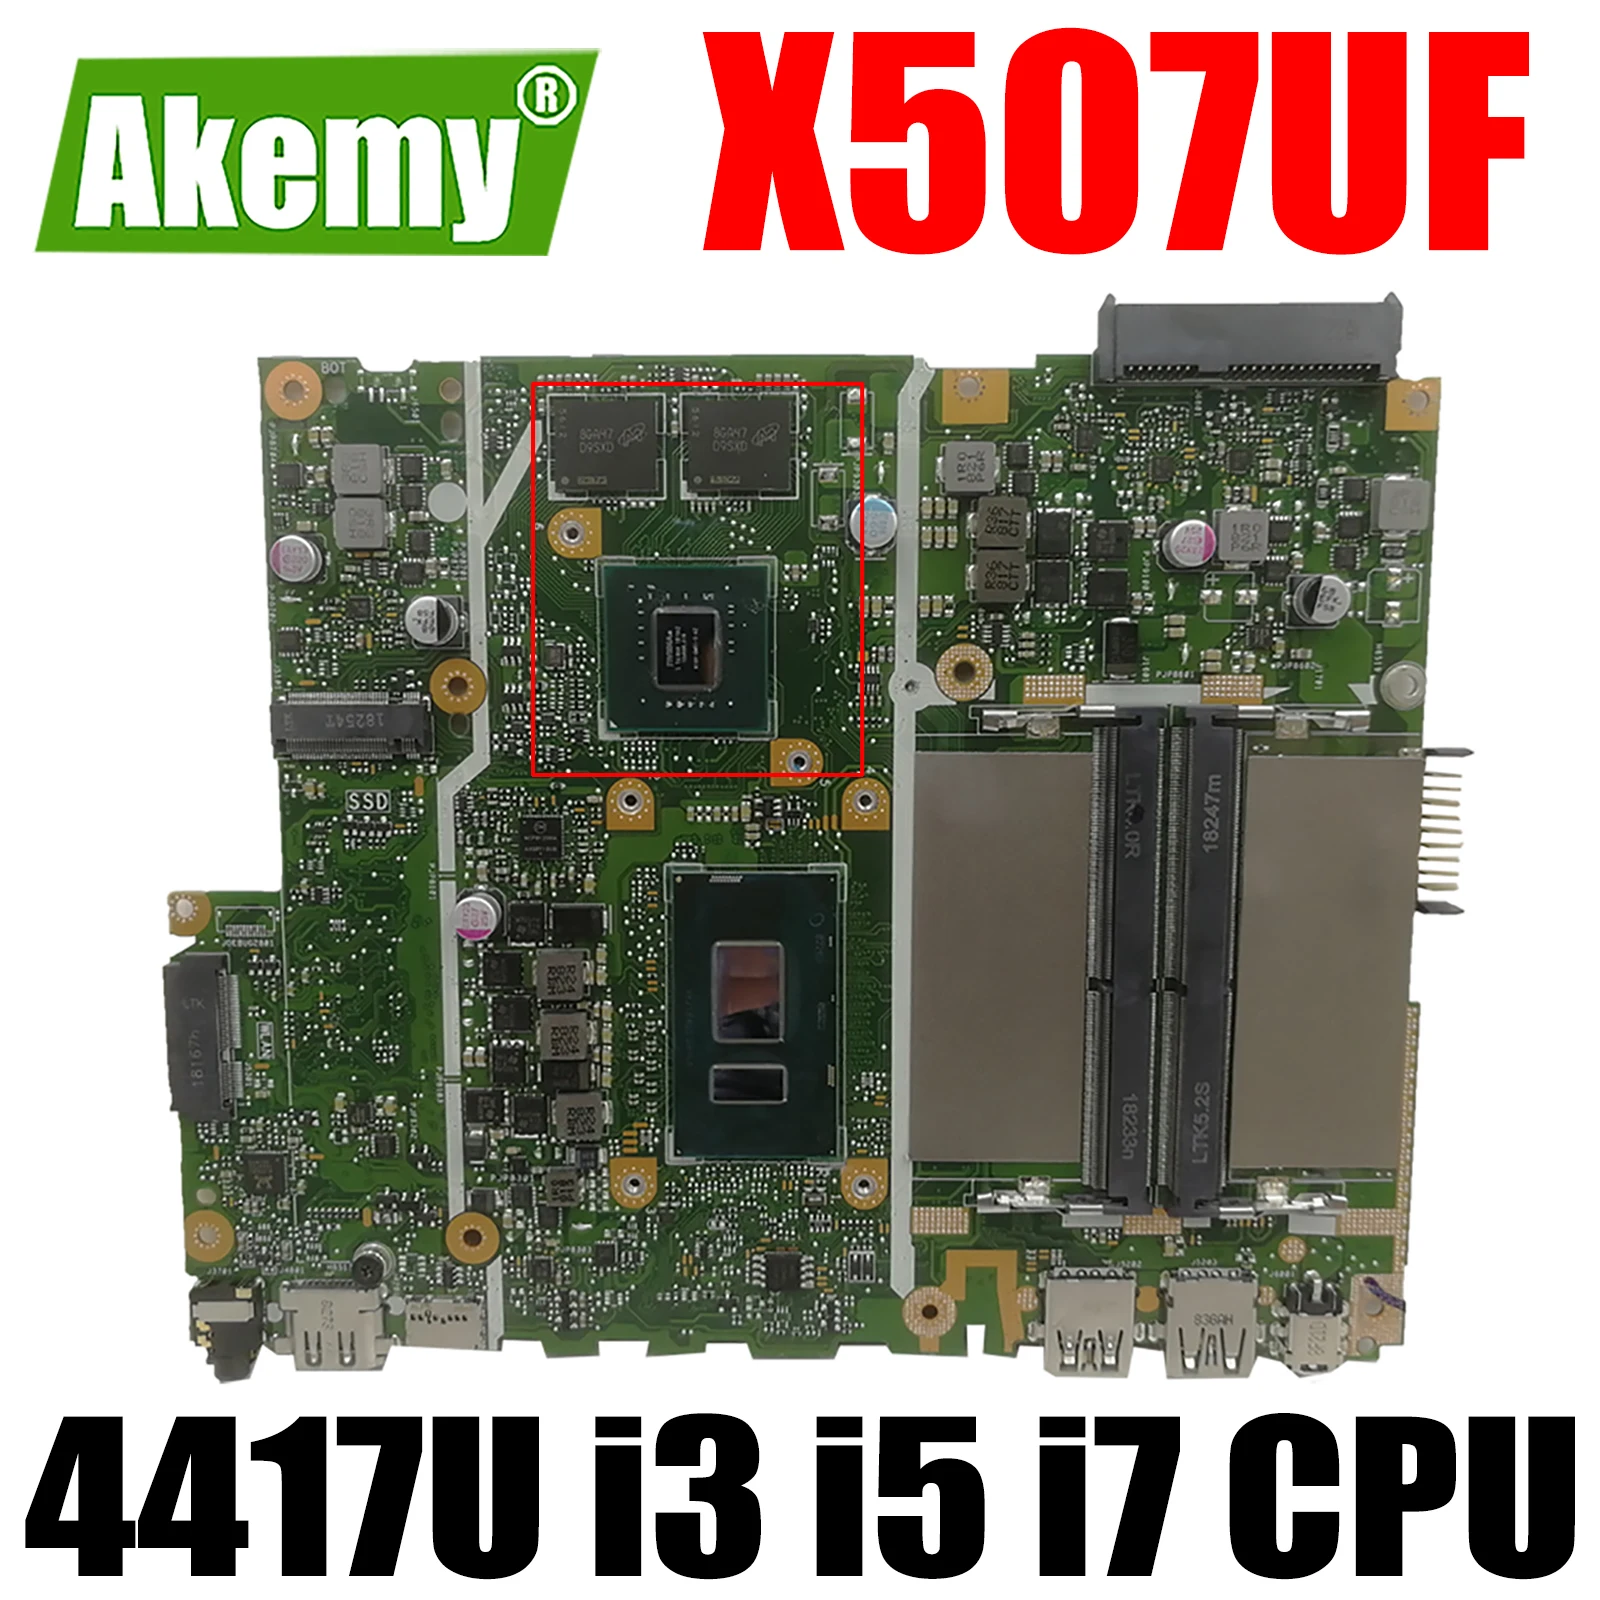 

X507UF 4417U i3 i5 i7 CPU GT920MX/2G GPU Notebook Mainboard for ASUS X507U X507UF X507UB X507UBR Laptop Motherboard Mainboard